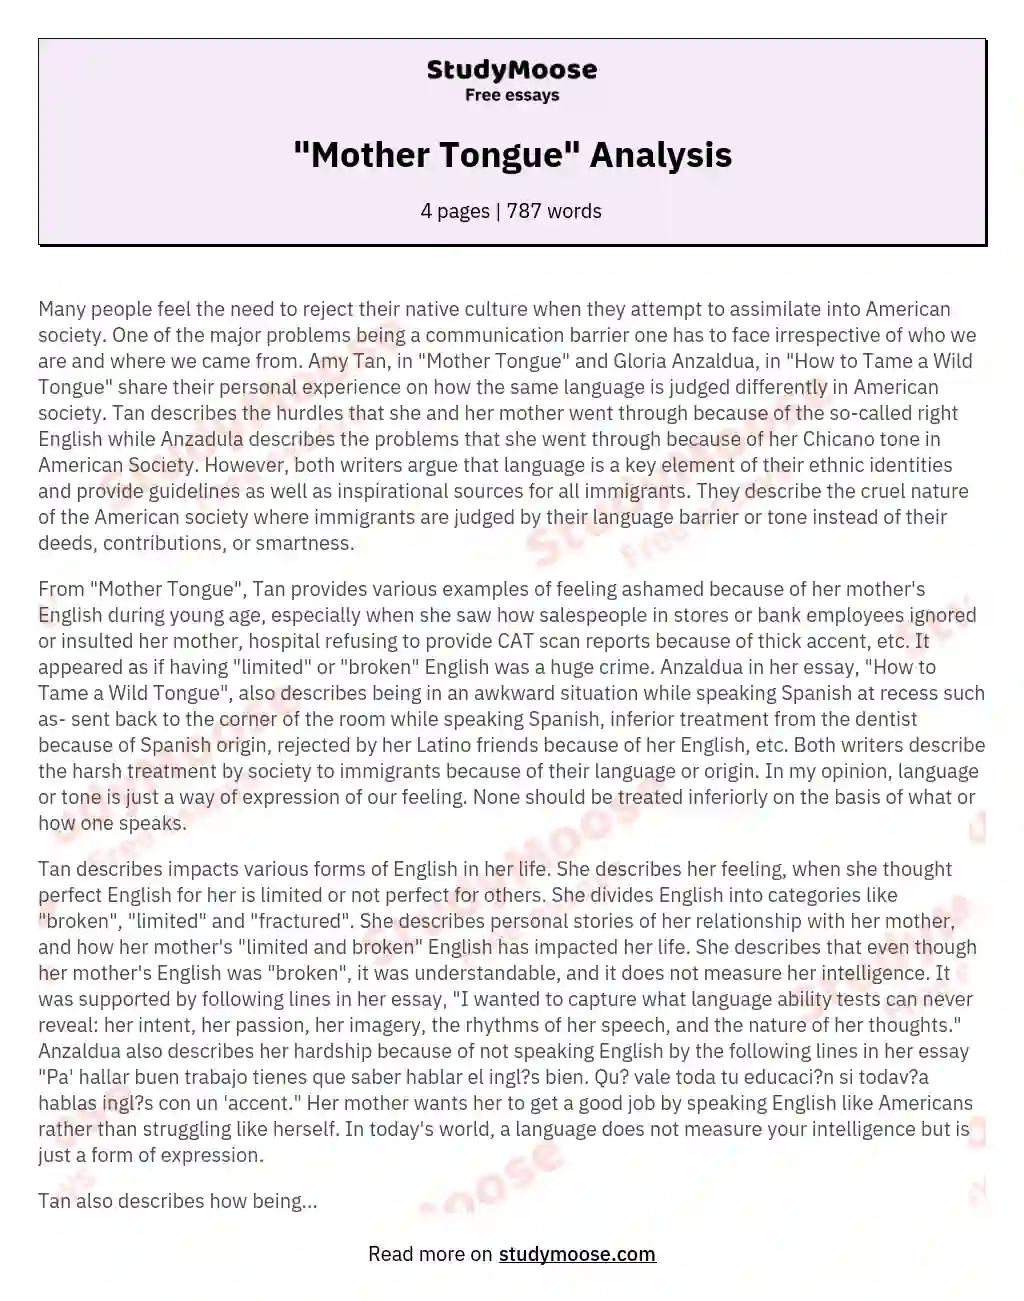 "Mother Tongue" Analysis